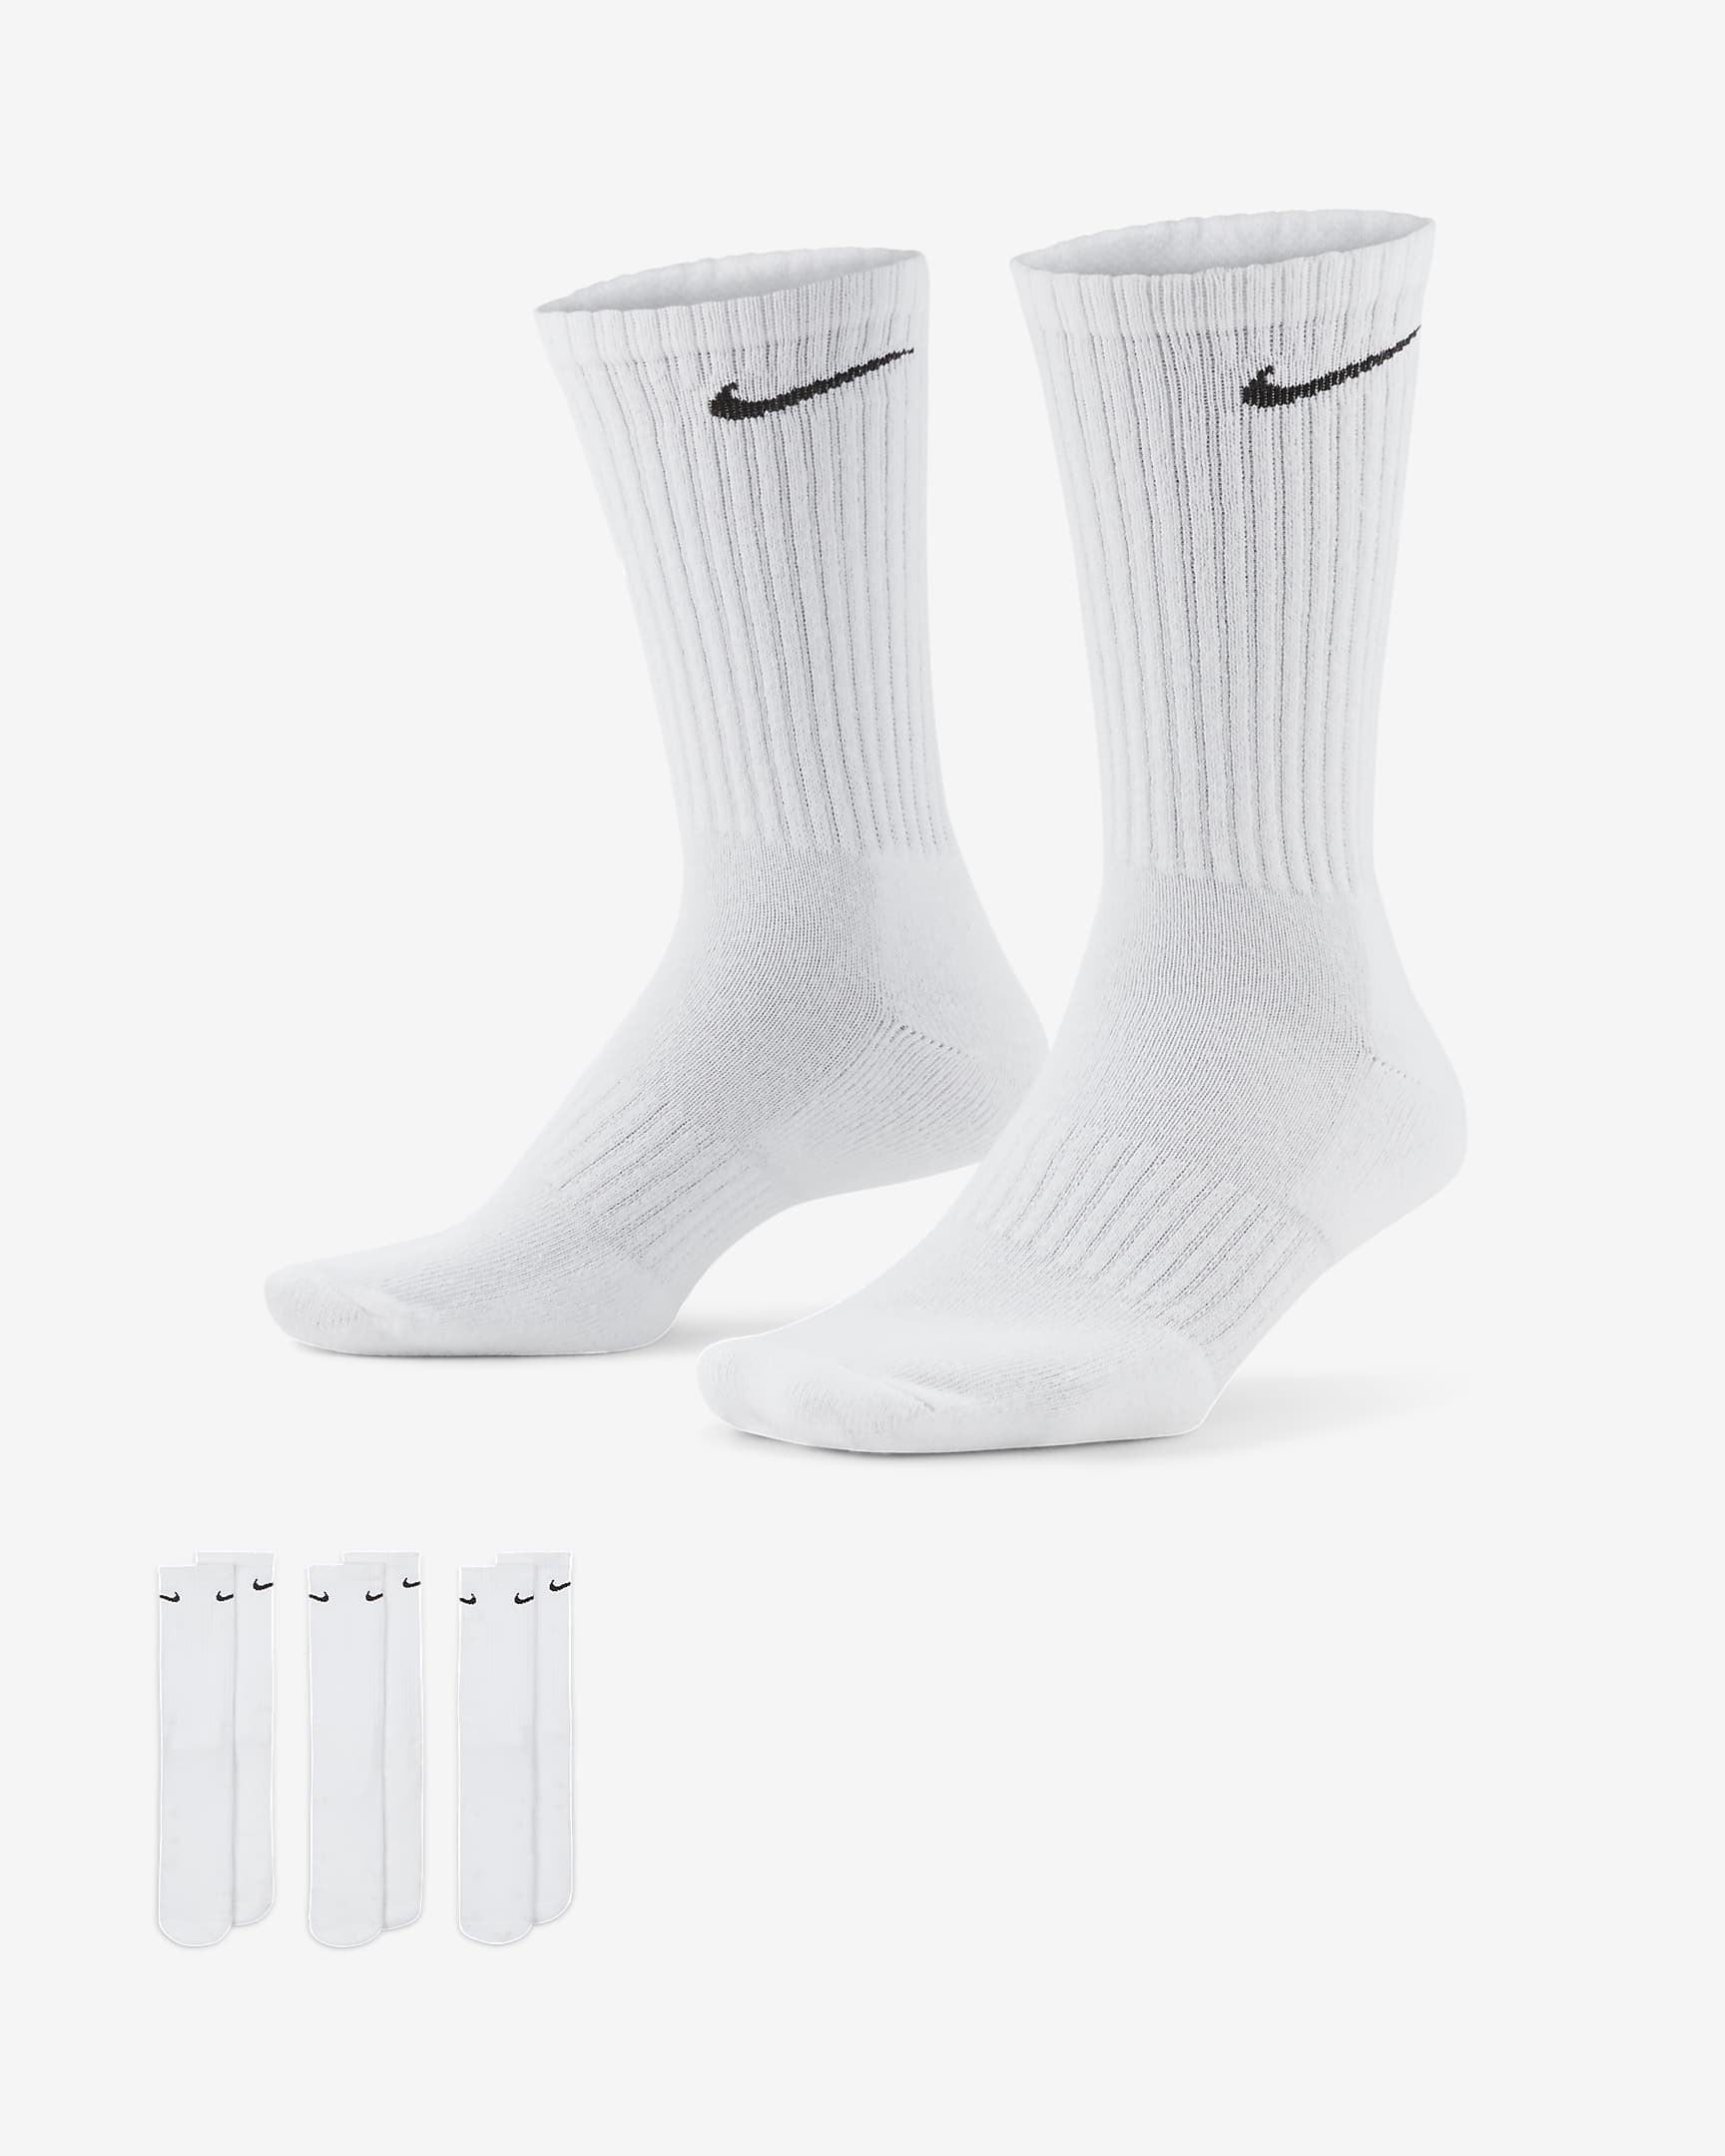 Nike Everyday Cushioned Training Crew Socks (3 Pairs) - White/Black